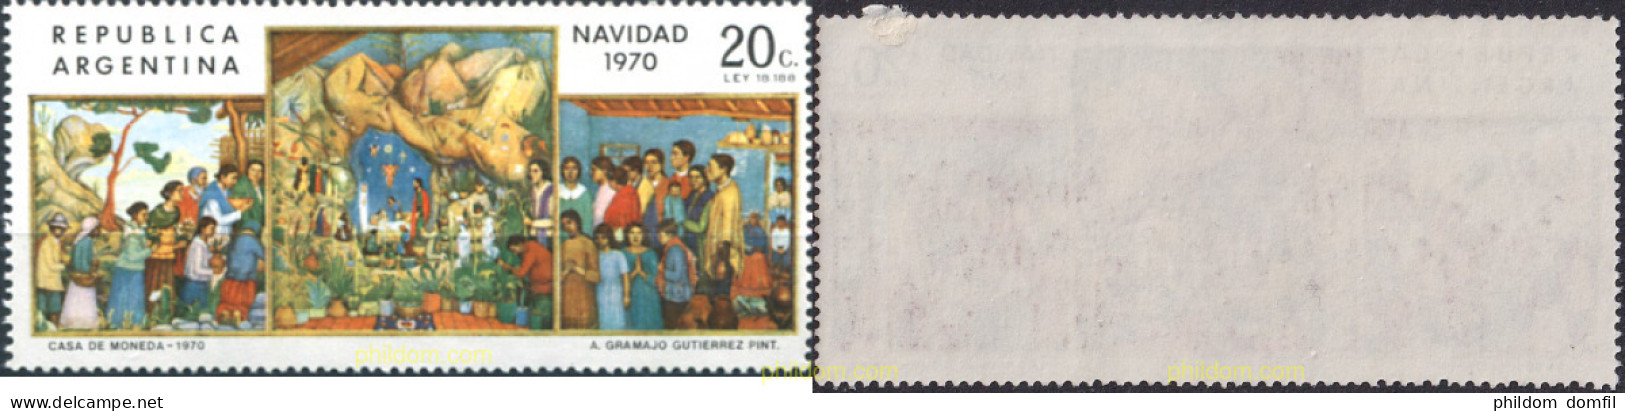 727270 MNH ARGENTINA 1970 NAVIDAD - Unused Stamps